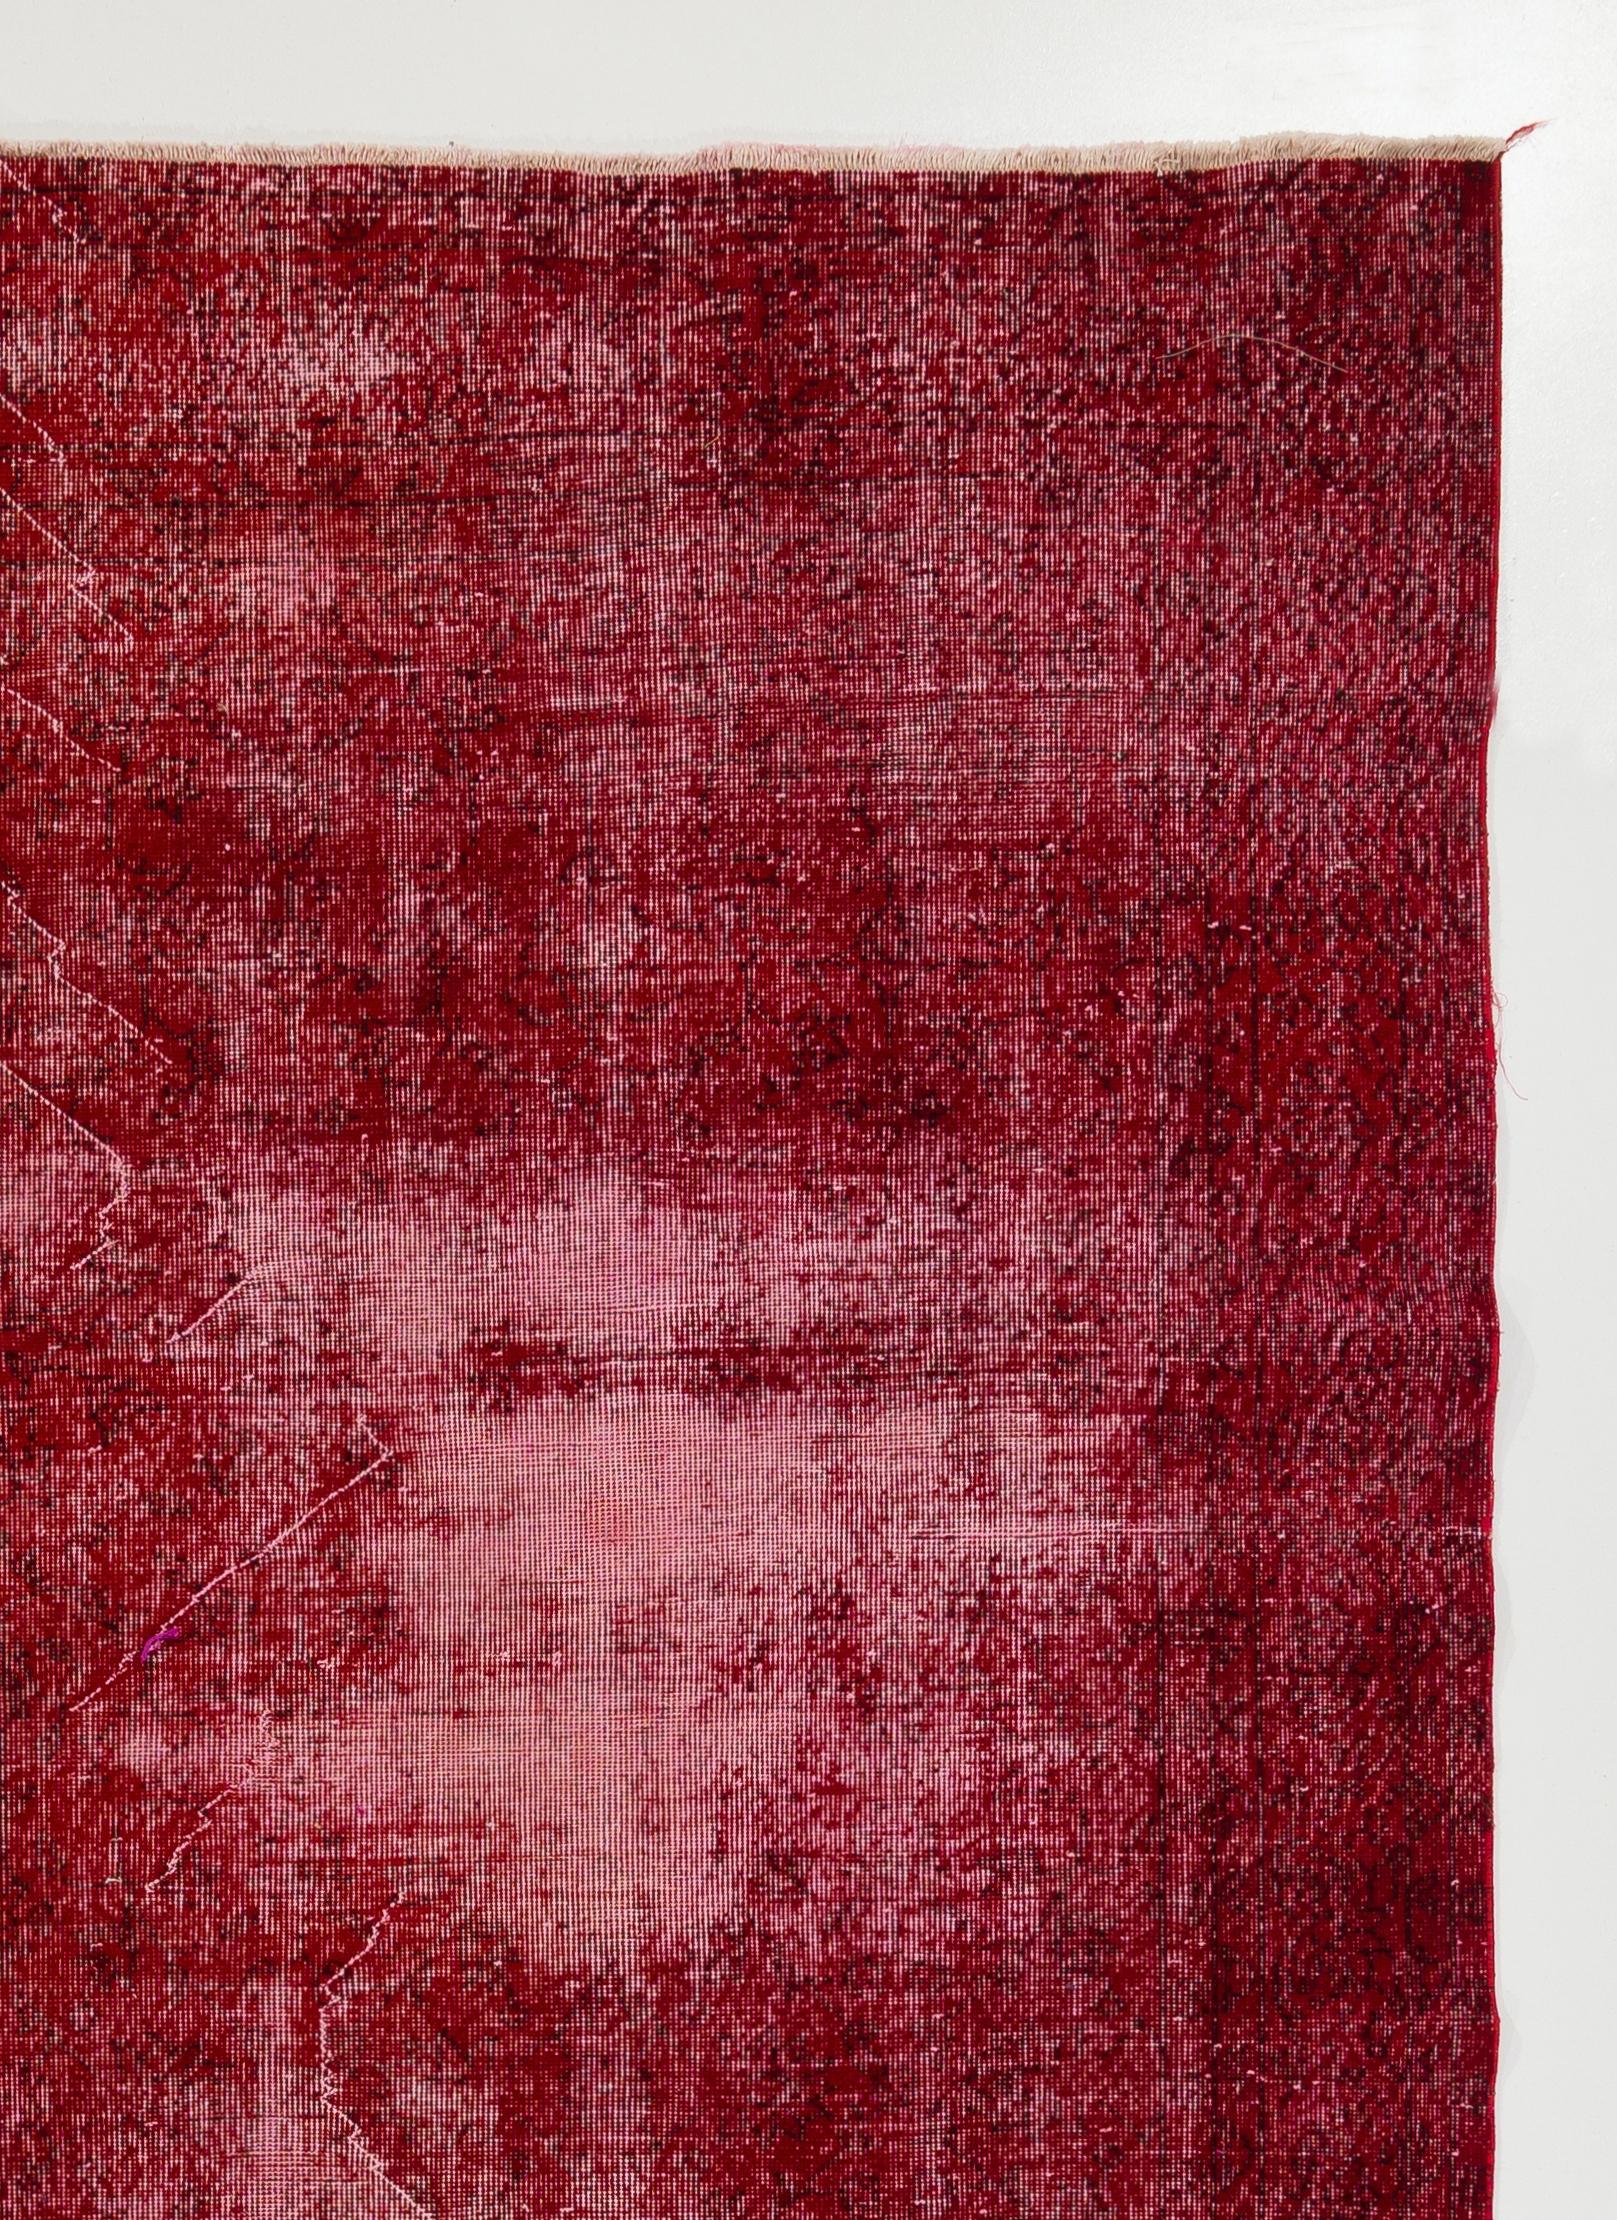 Modern 7.8x10.8 Ft Vintage Turkish Rug in Ruby Red, Distressed Handmade Wool Carpet For Sale